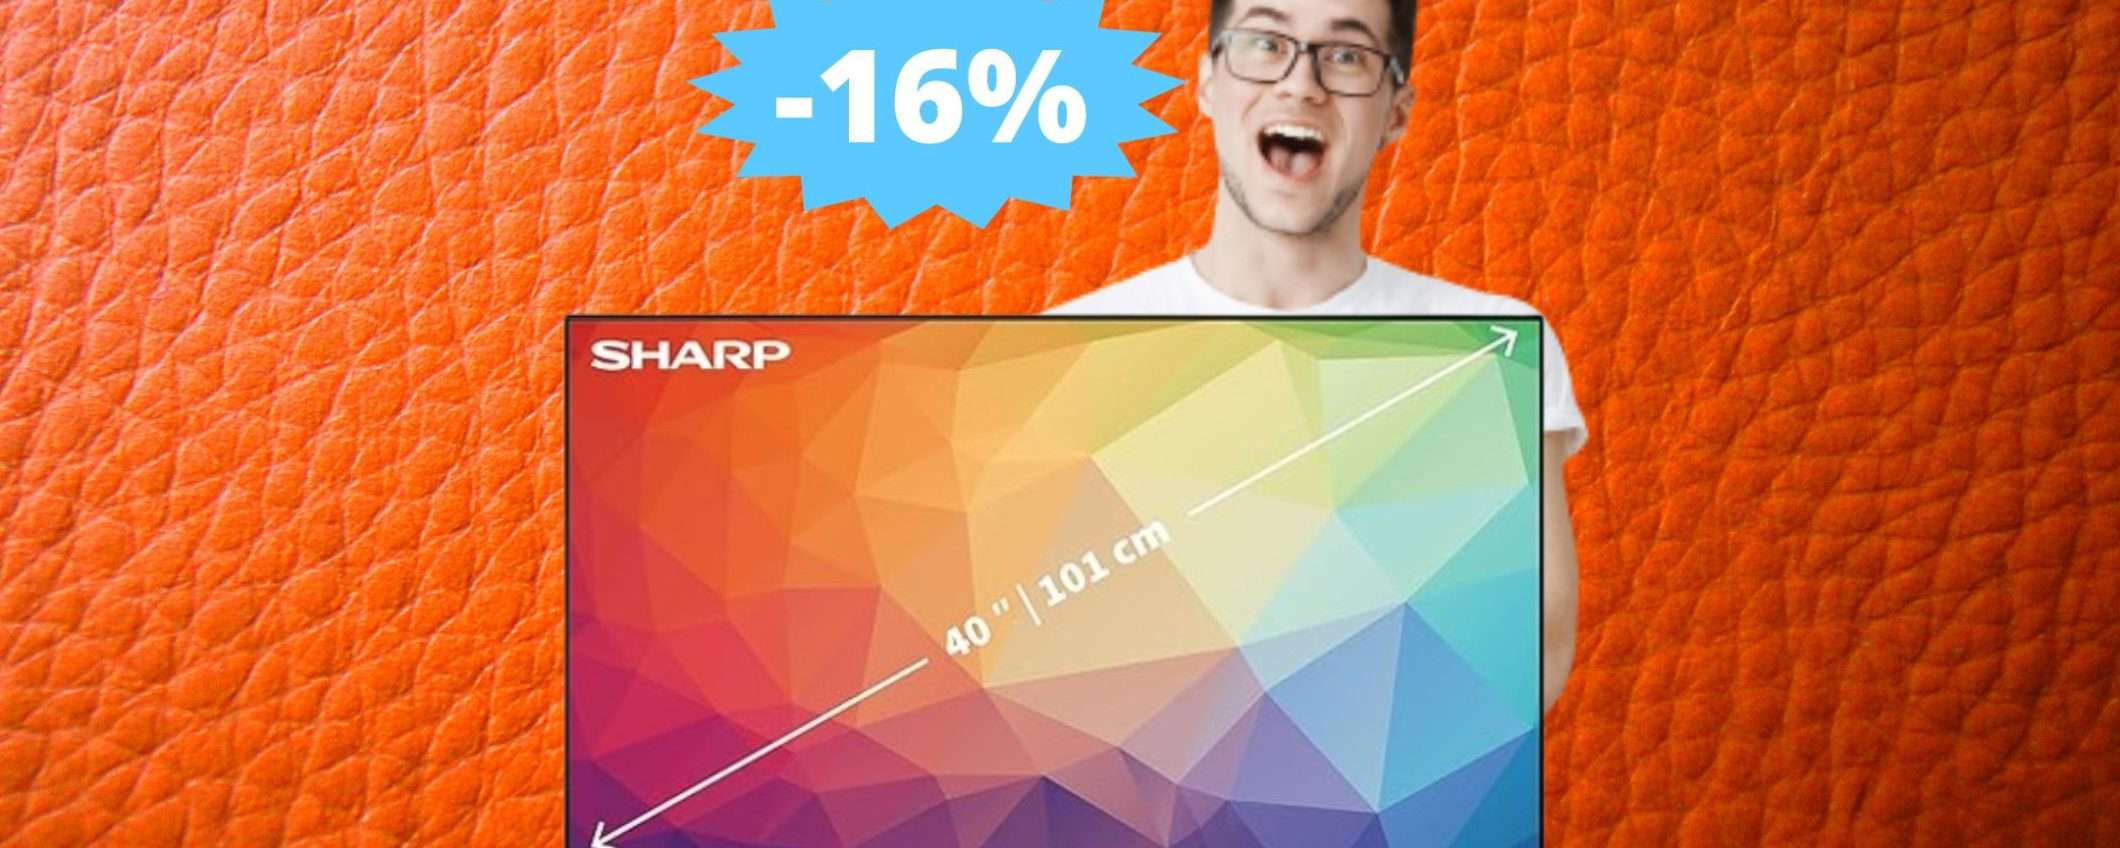 Smart TV Sharp Aquos: SUPER sconto del 16% su Amazon